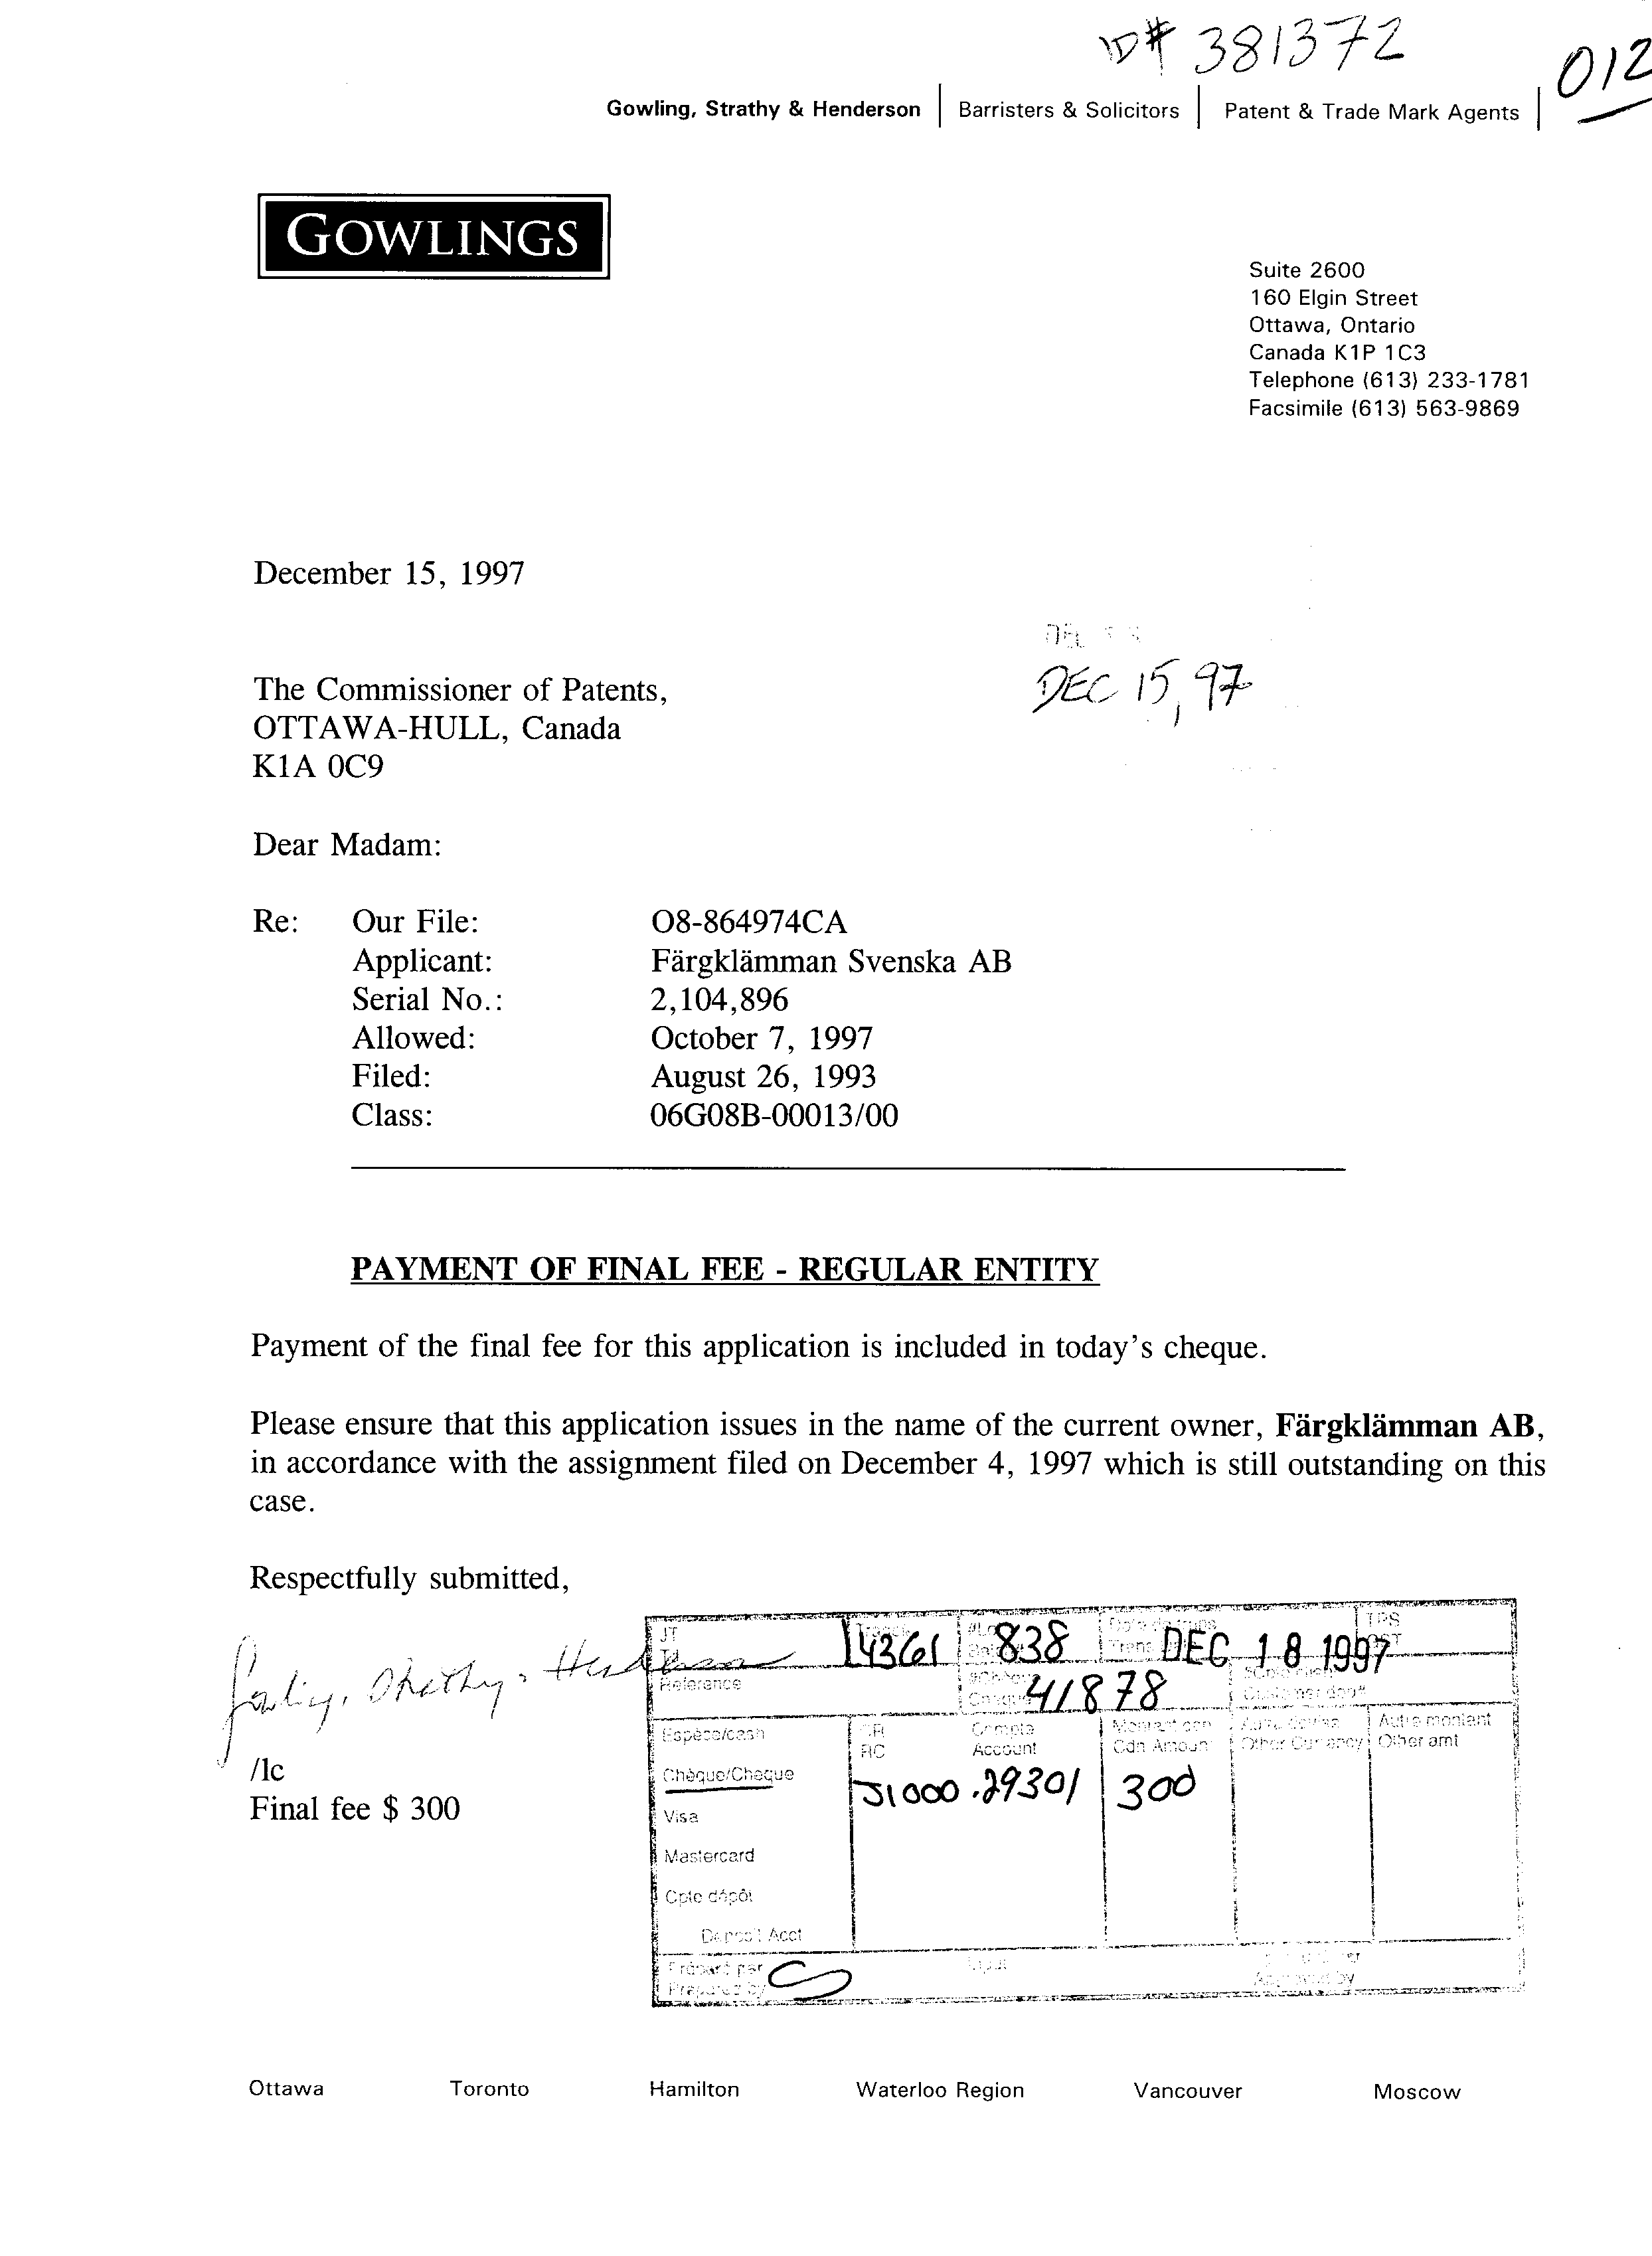 Canadian Patent Document 2104896. Correspondence 19961215. Image 1 of 1